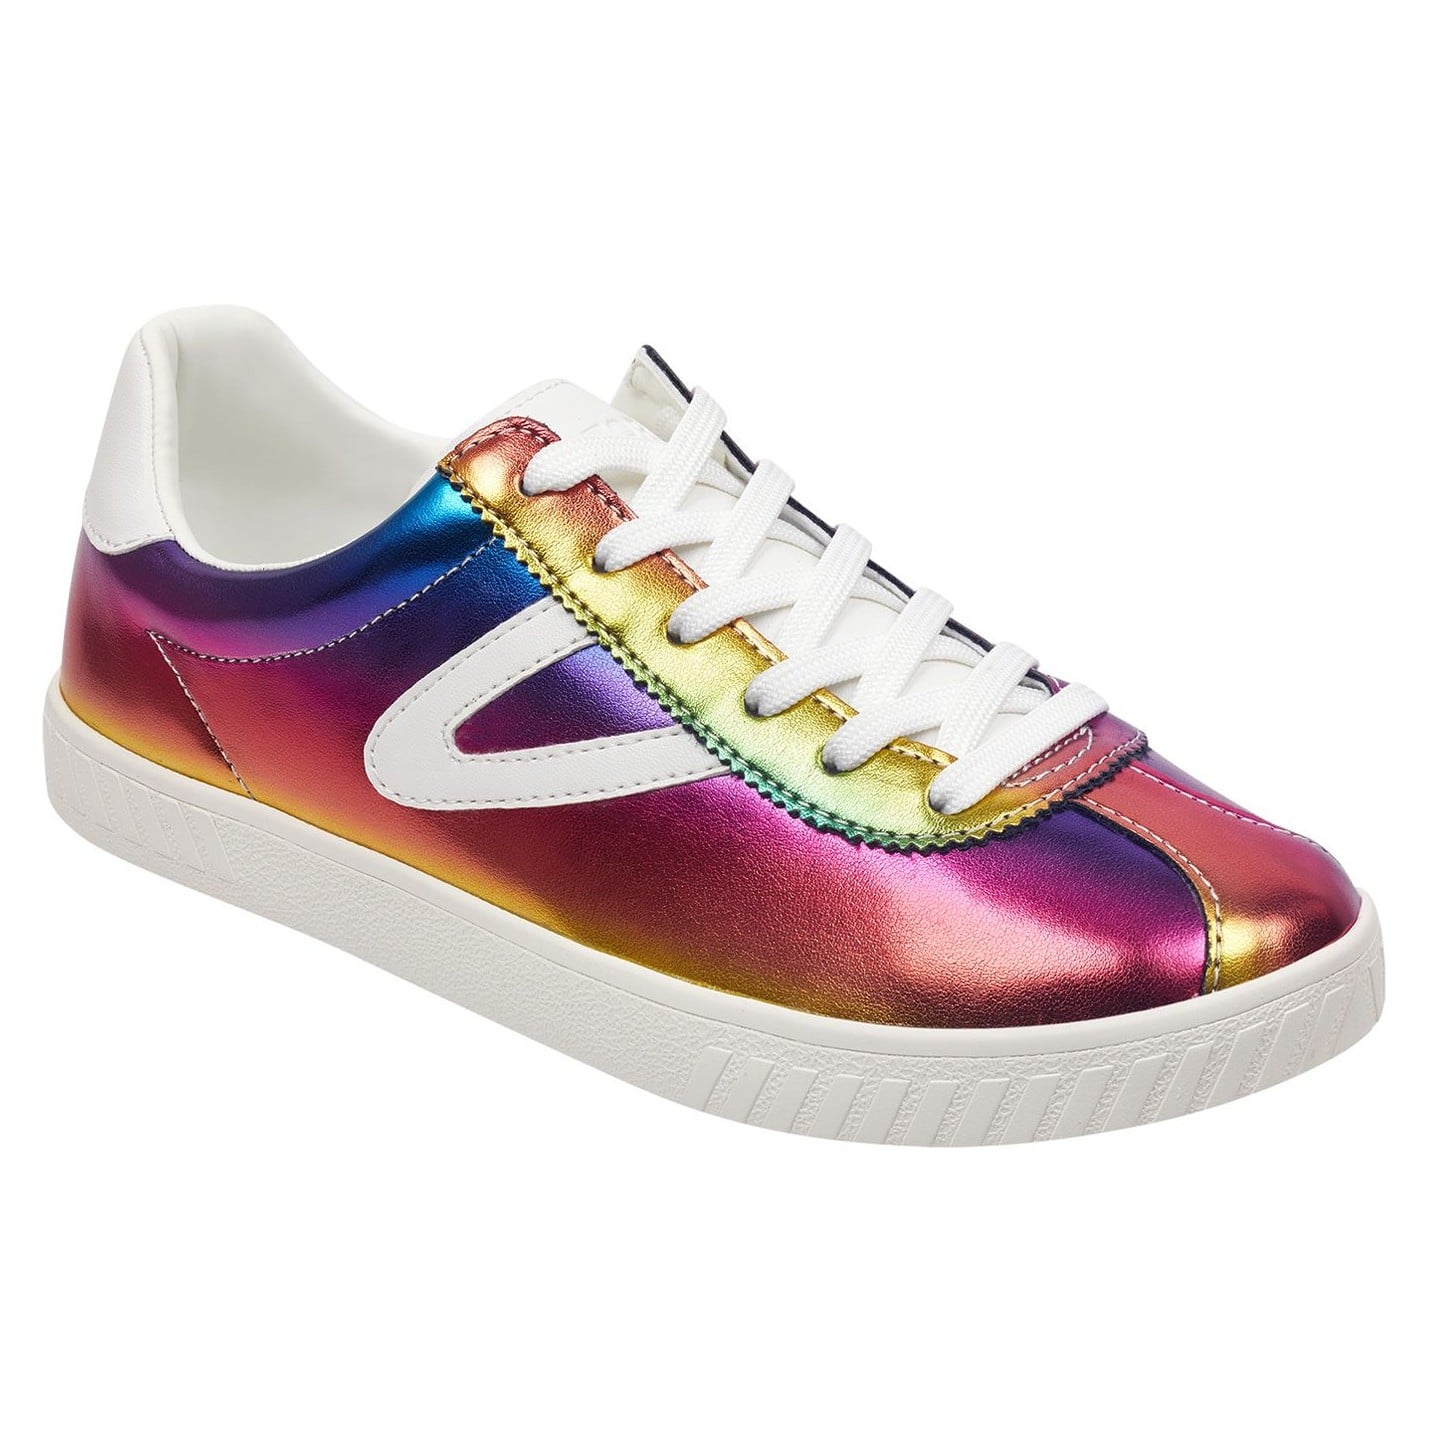 Tretorn Rainbow Sneakers 2019 